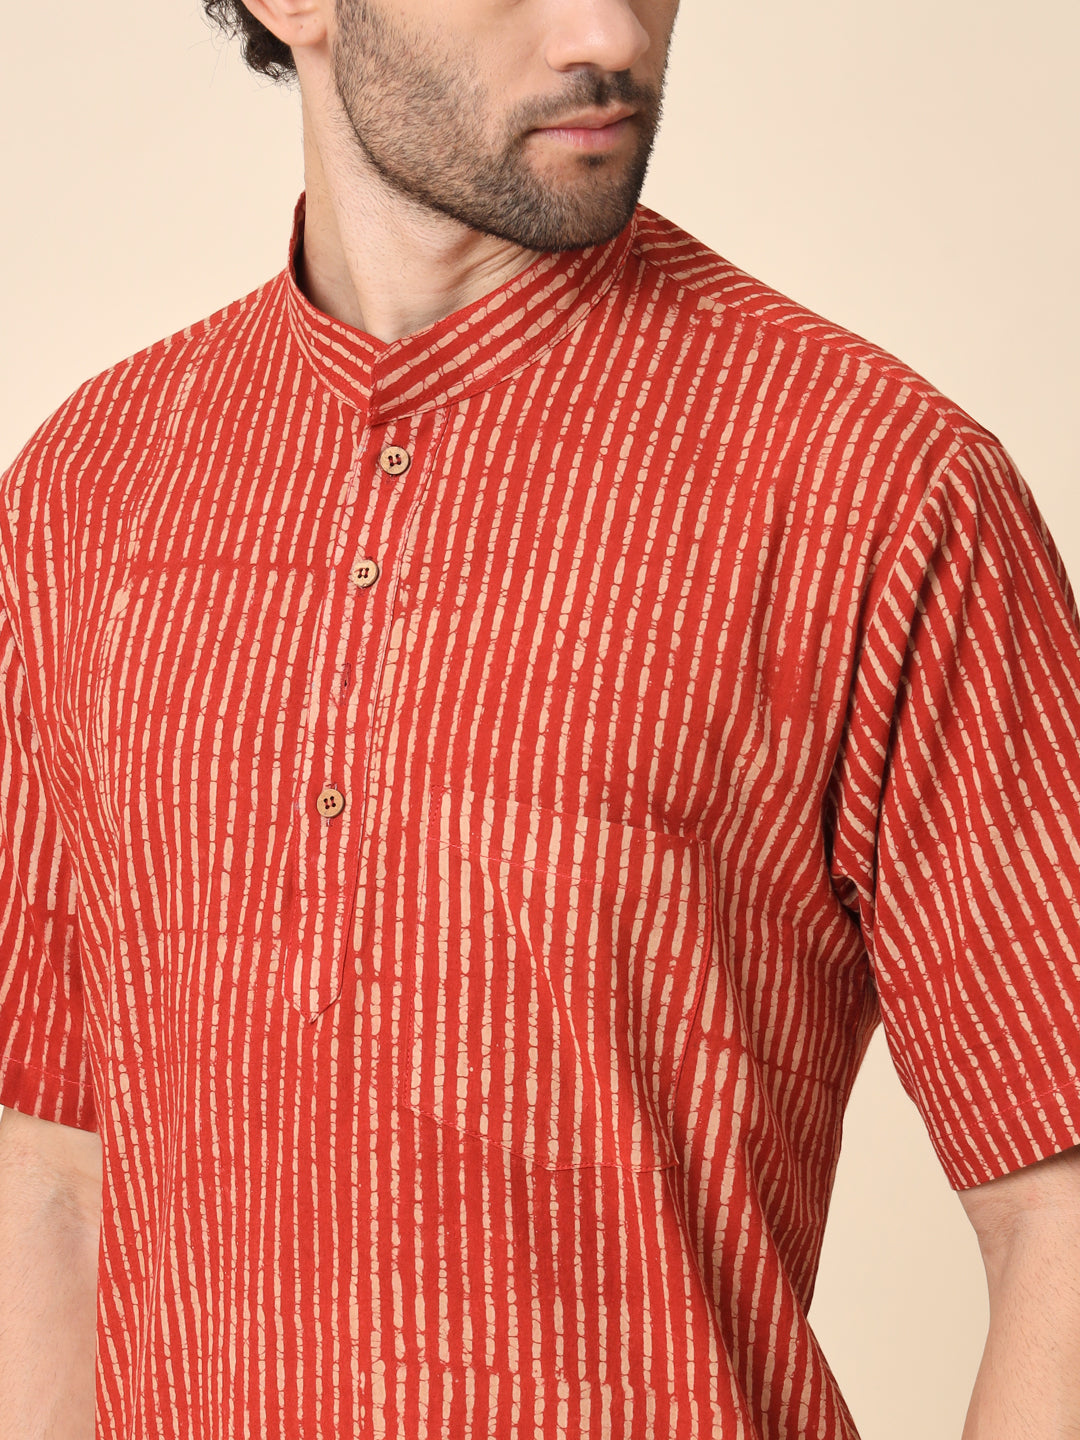 Men's Striped Red Short Kurta - TREND-MATTERS